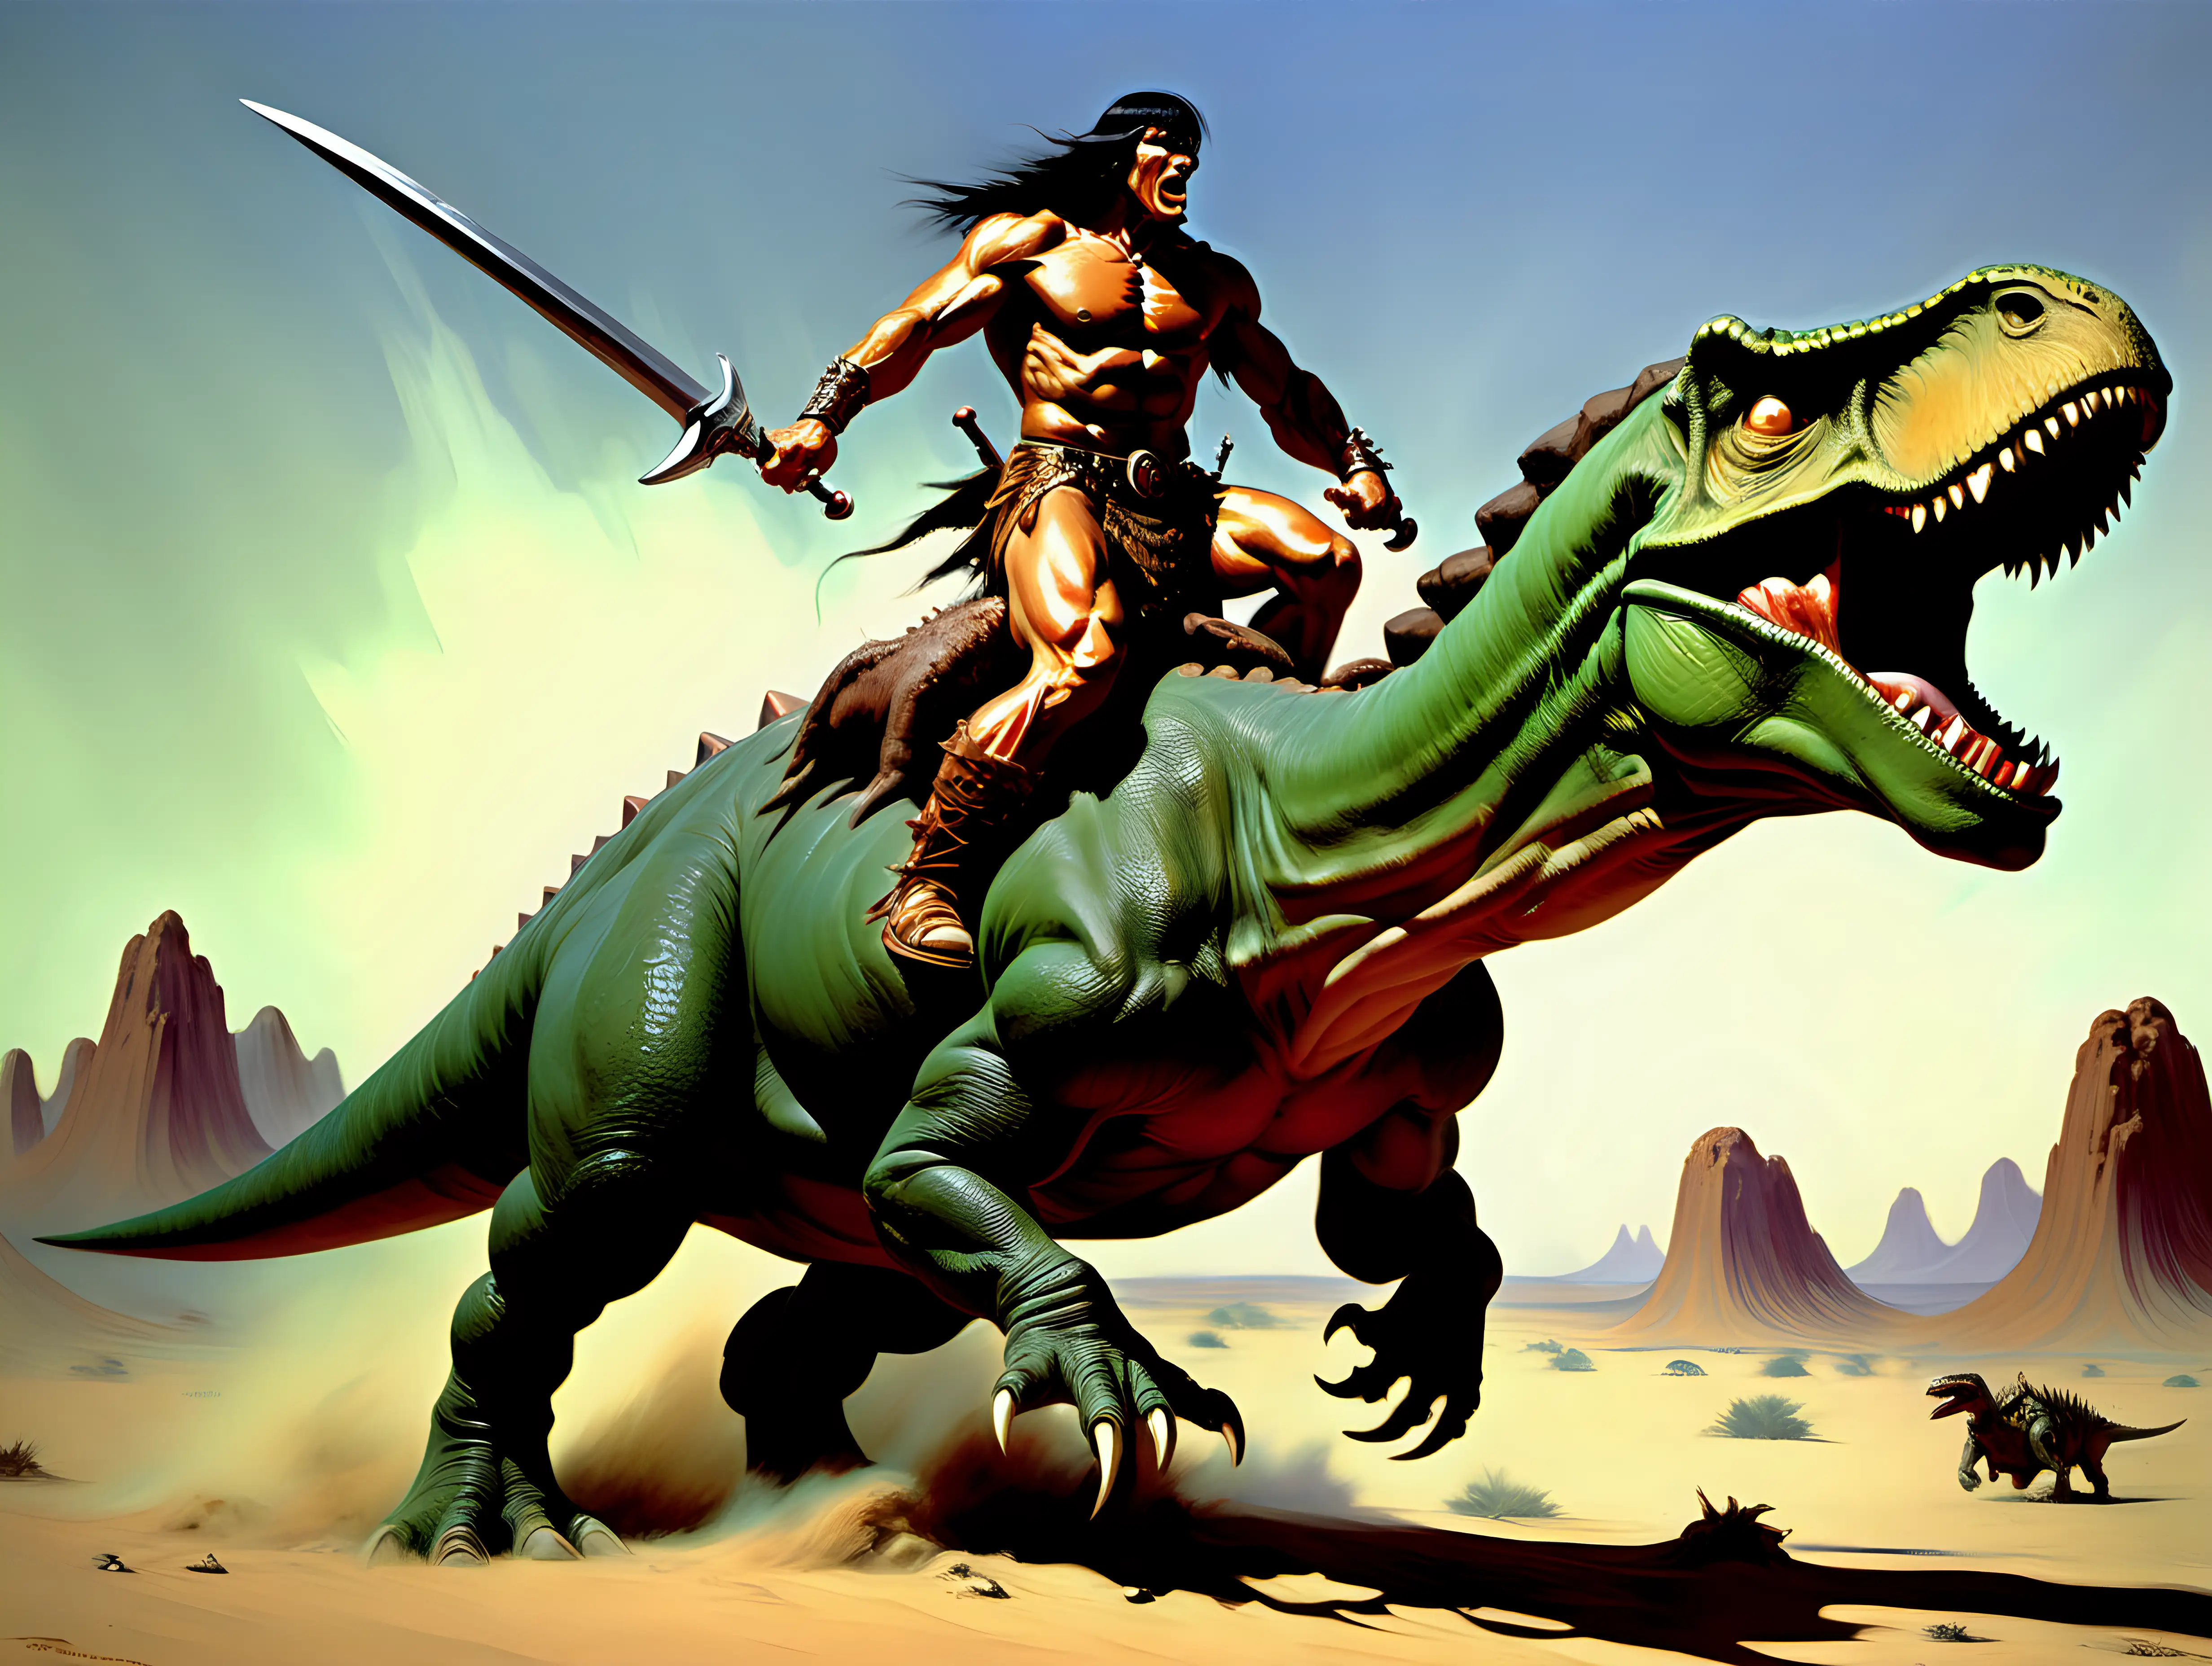 conan the barbarian riding a dinosaur in the desert Frank Frazetta style